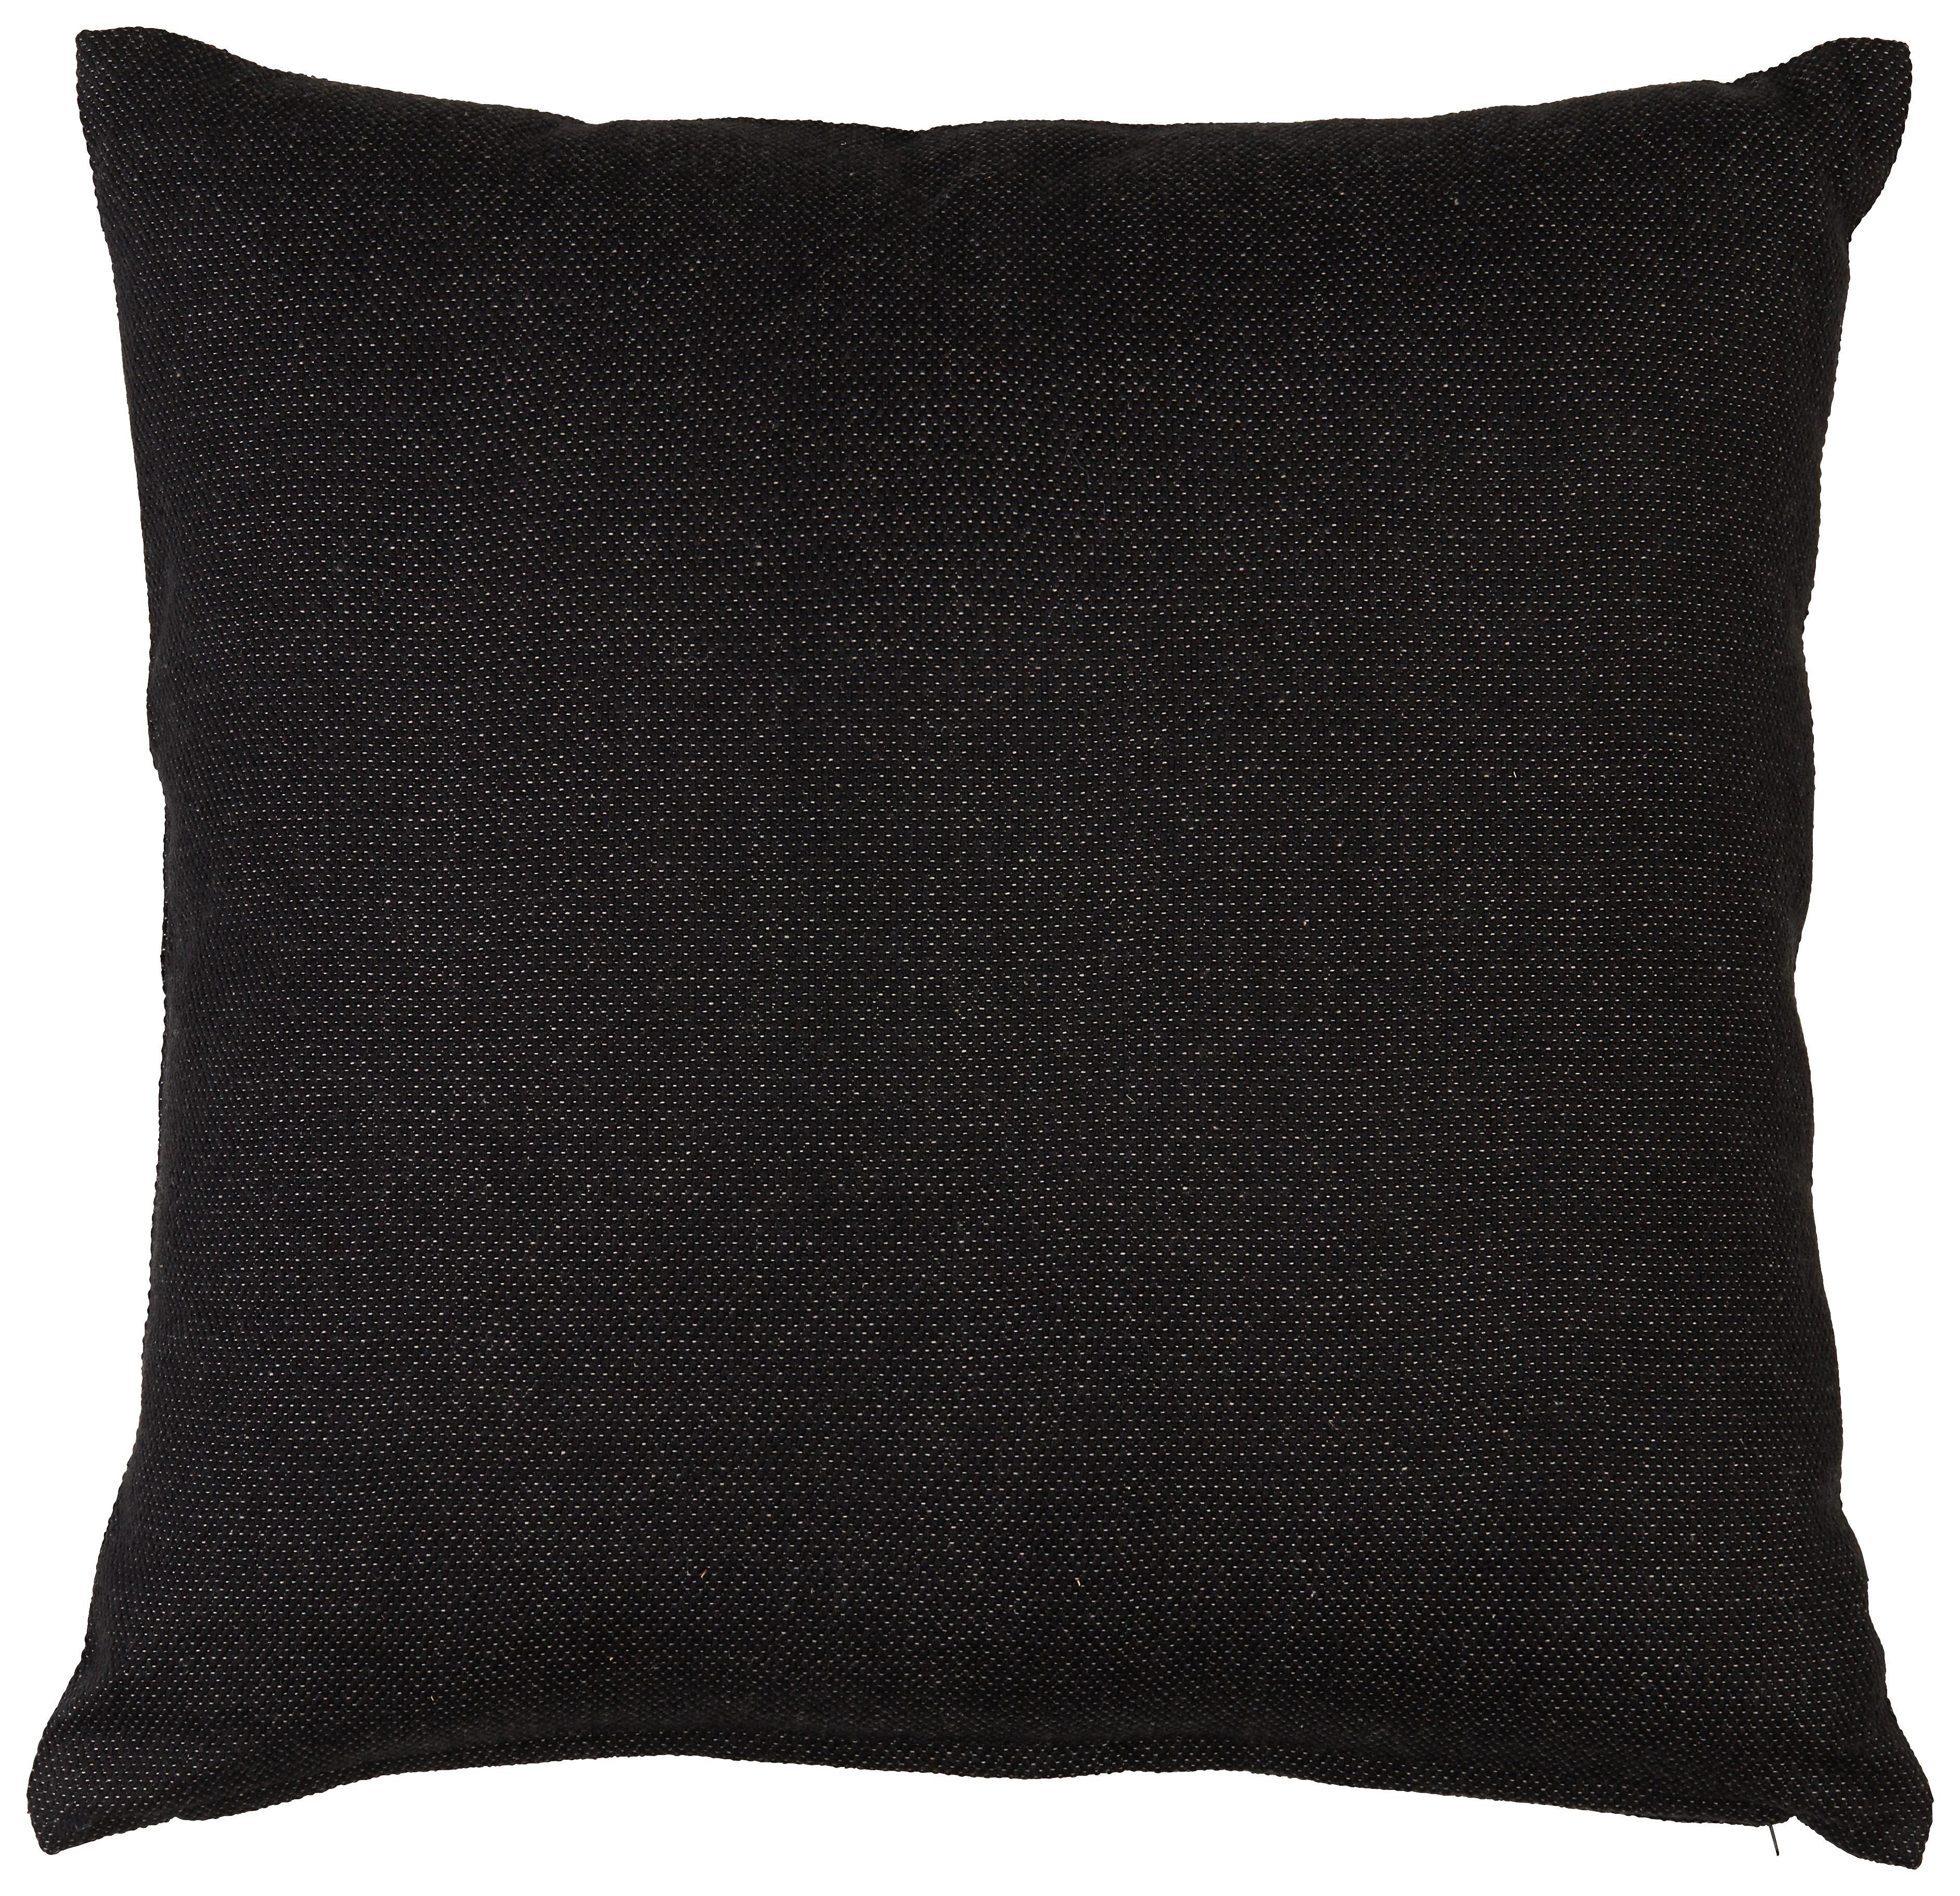 Dekorační Polštář Chris, 50/50cm, Černá - černá, Moderní, textil (50/50cm) - Premium Living